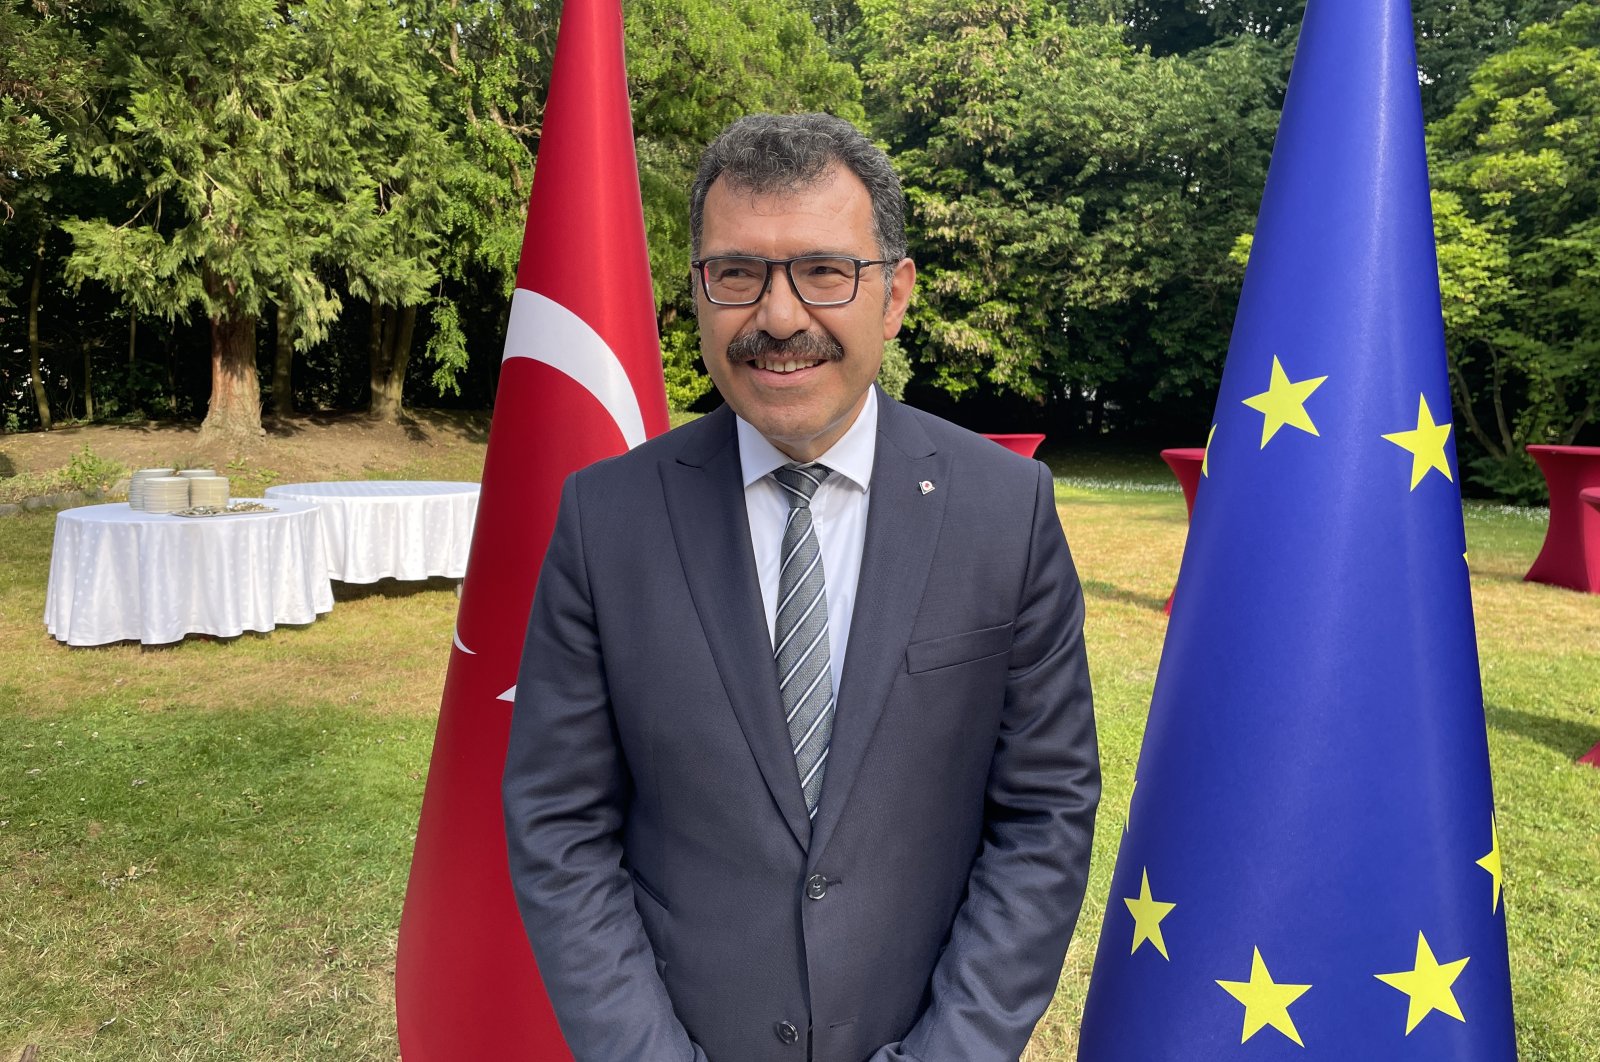 Türkiye set to further enhance its global scientific visibility